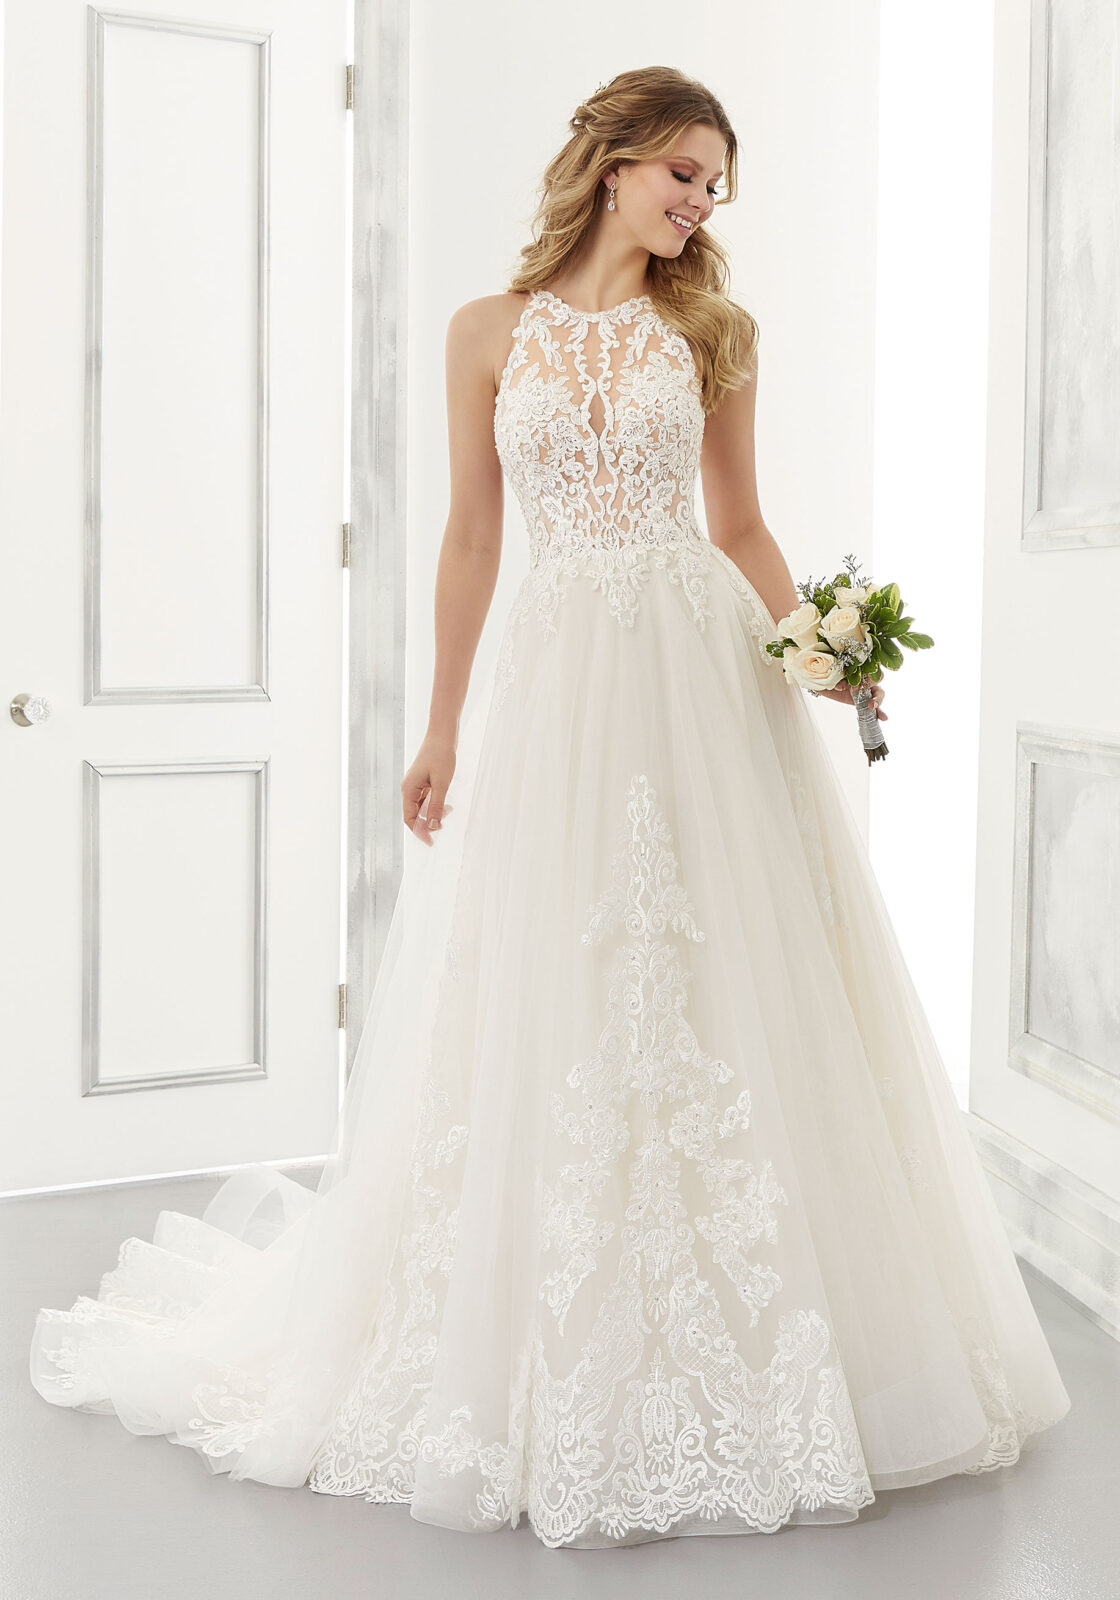 Wedding Dress Mori Lee Bridal Fall 2020 Collection 2187 Analiese 7516